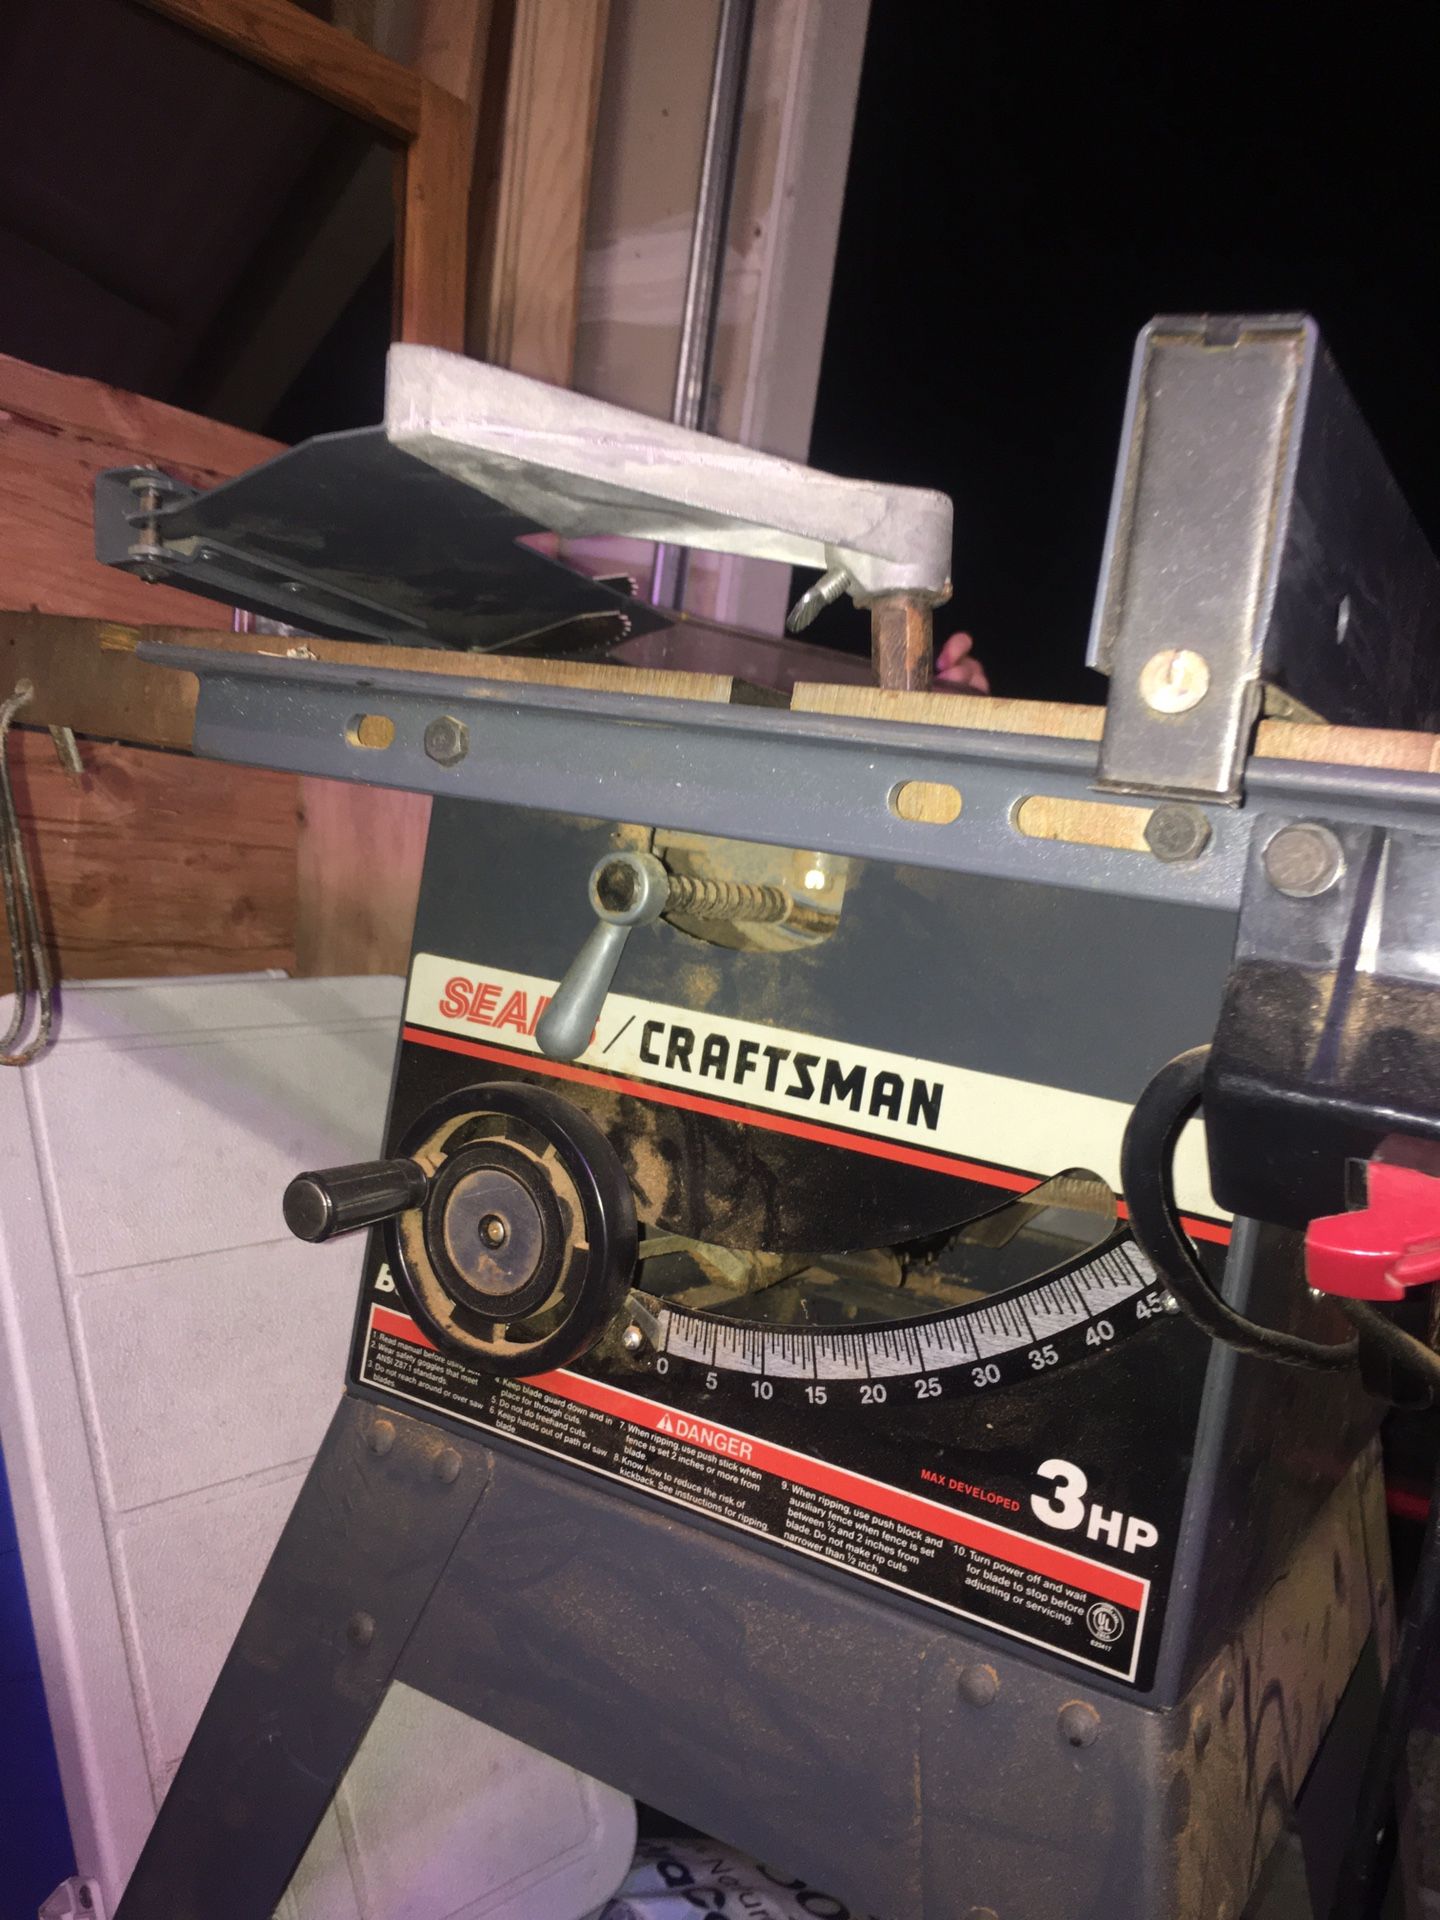 3hp craftsman 10” belt drive table saw